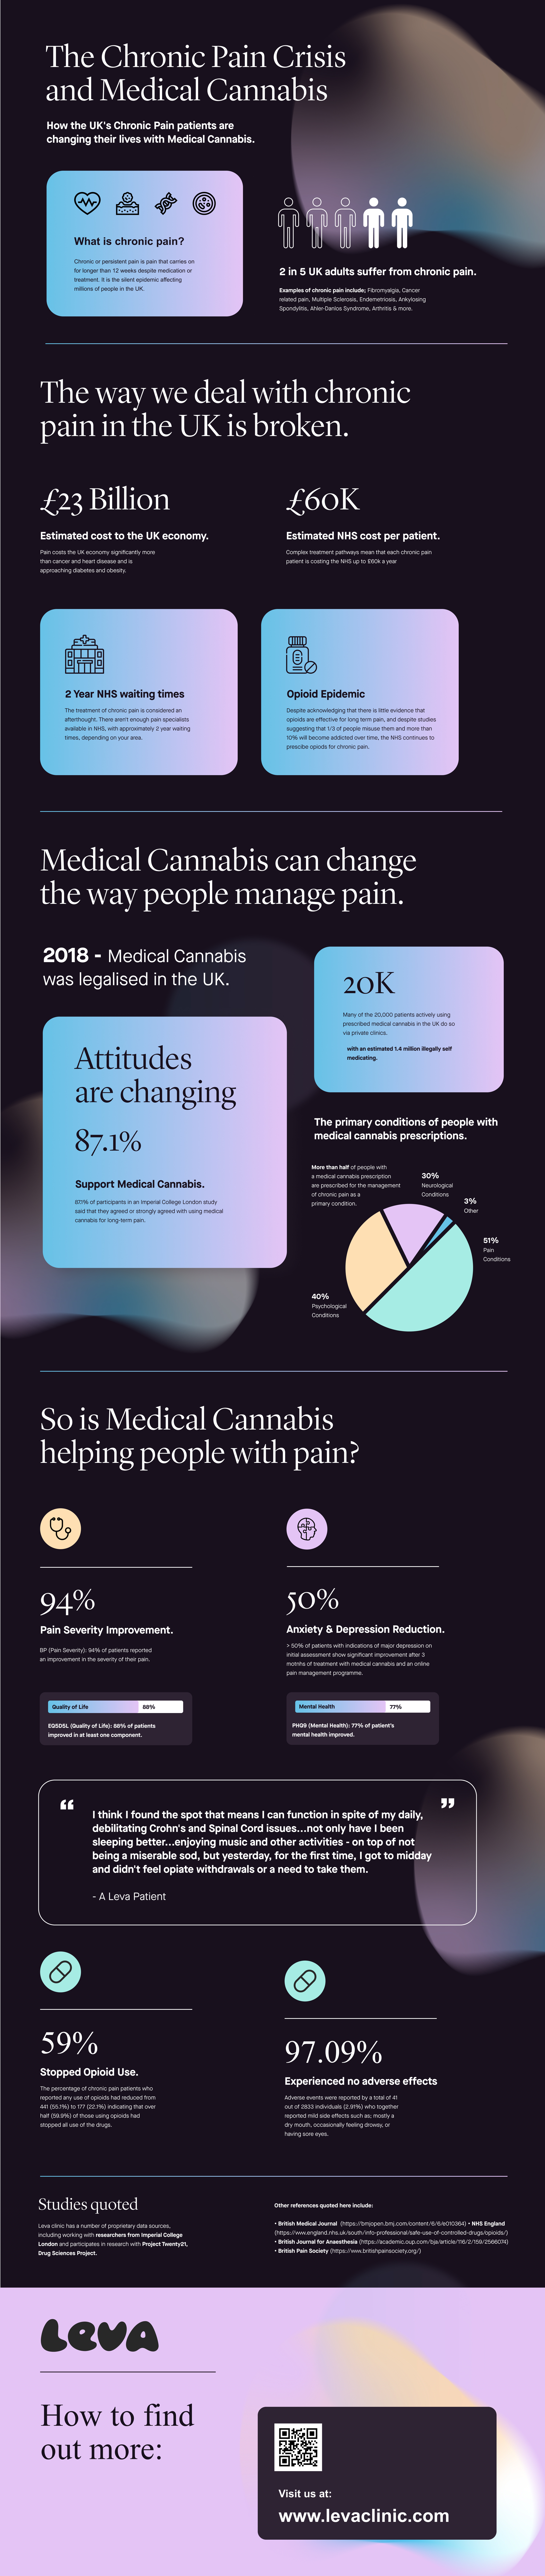 Medical Cannabis and Chronic Pain